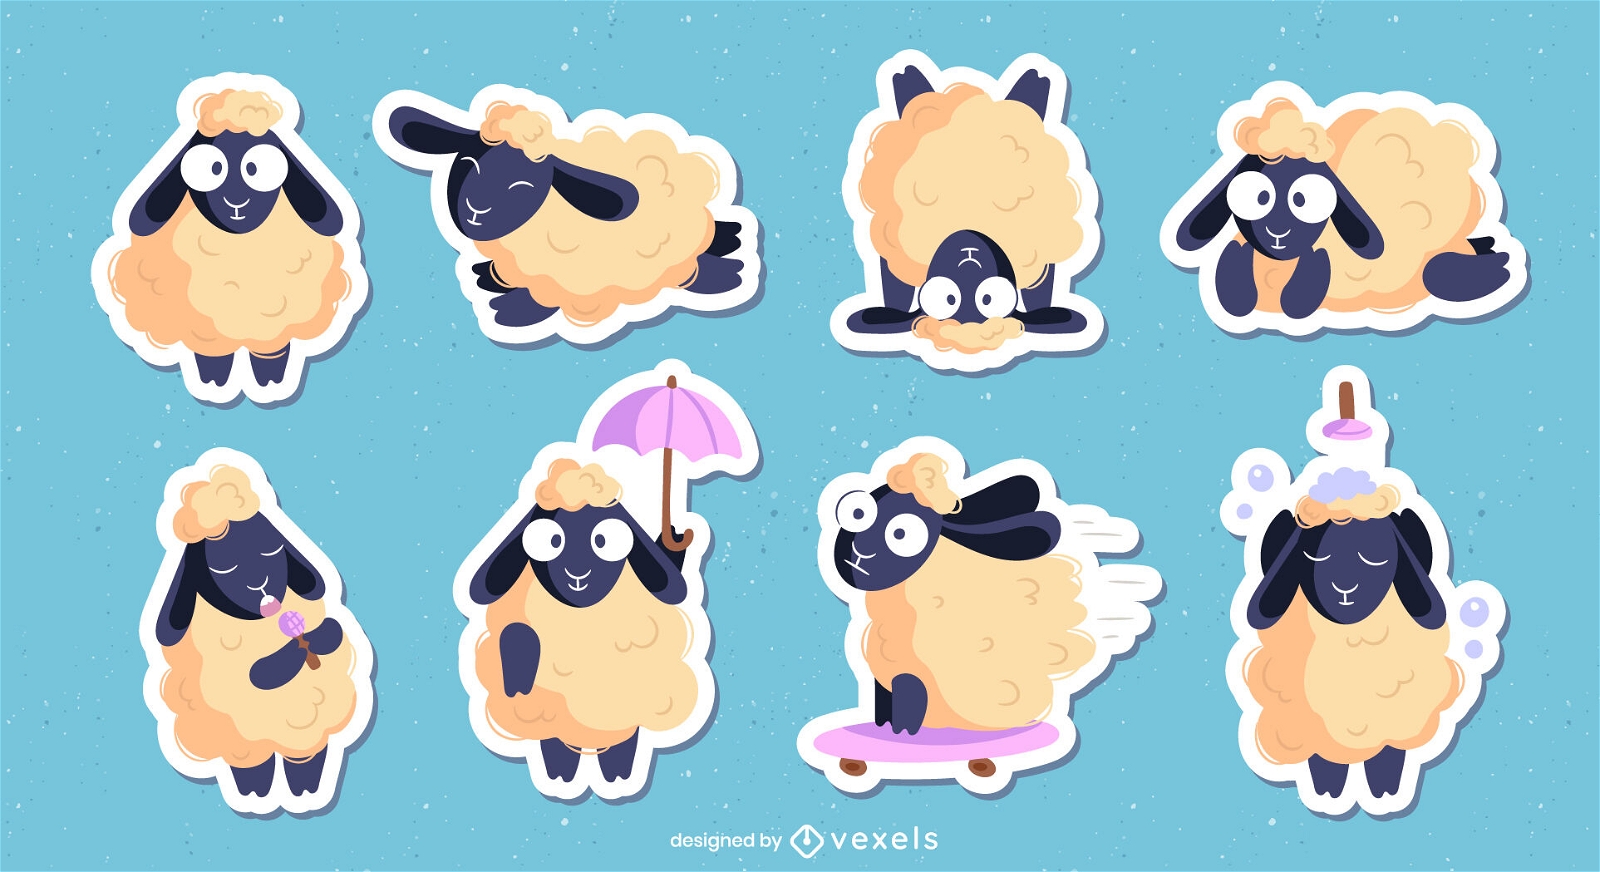 Sheep farm animal cartoon character set